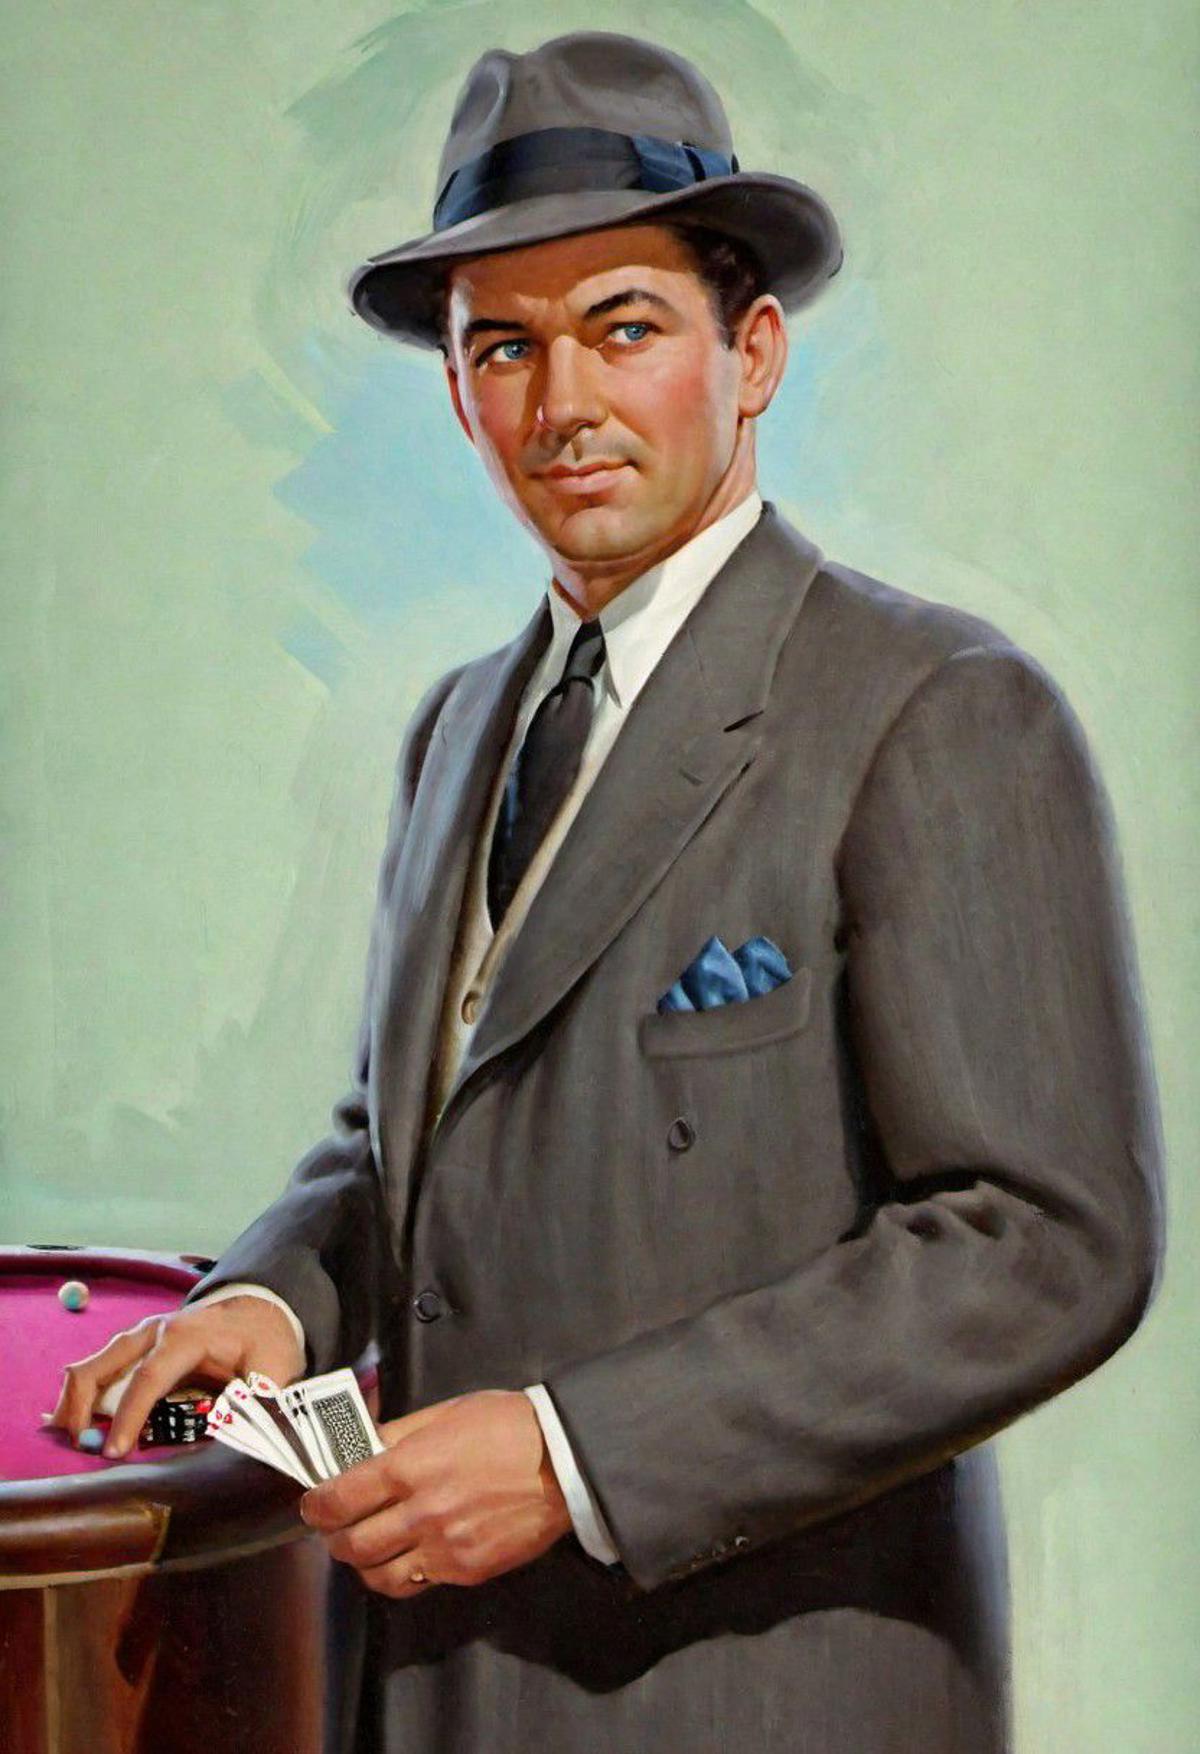 Art Frahm 1950s pin-up style XL image by WigwamAI